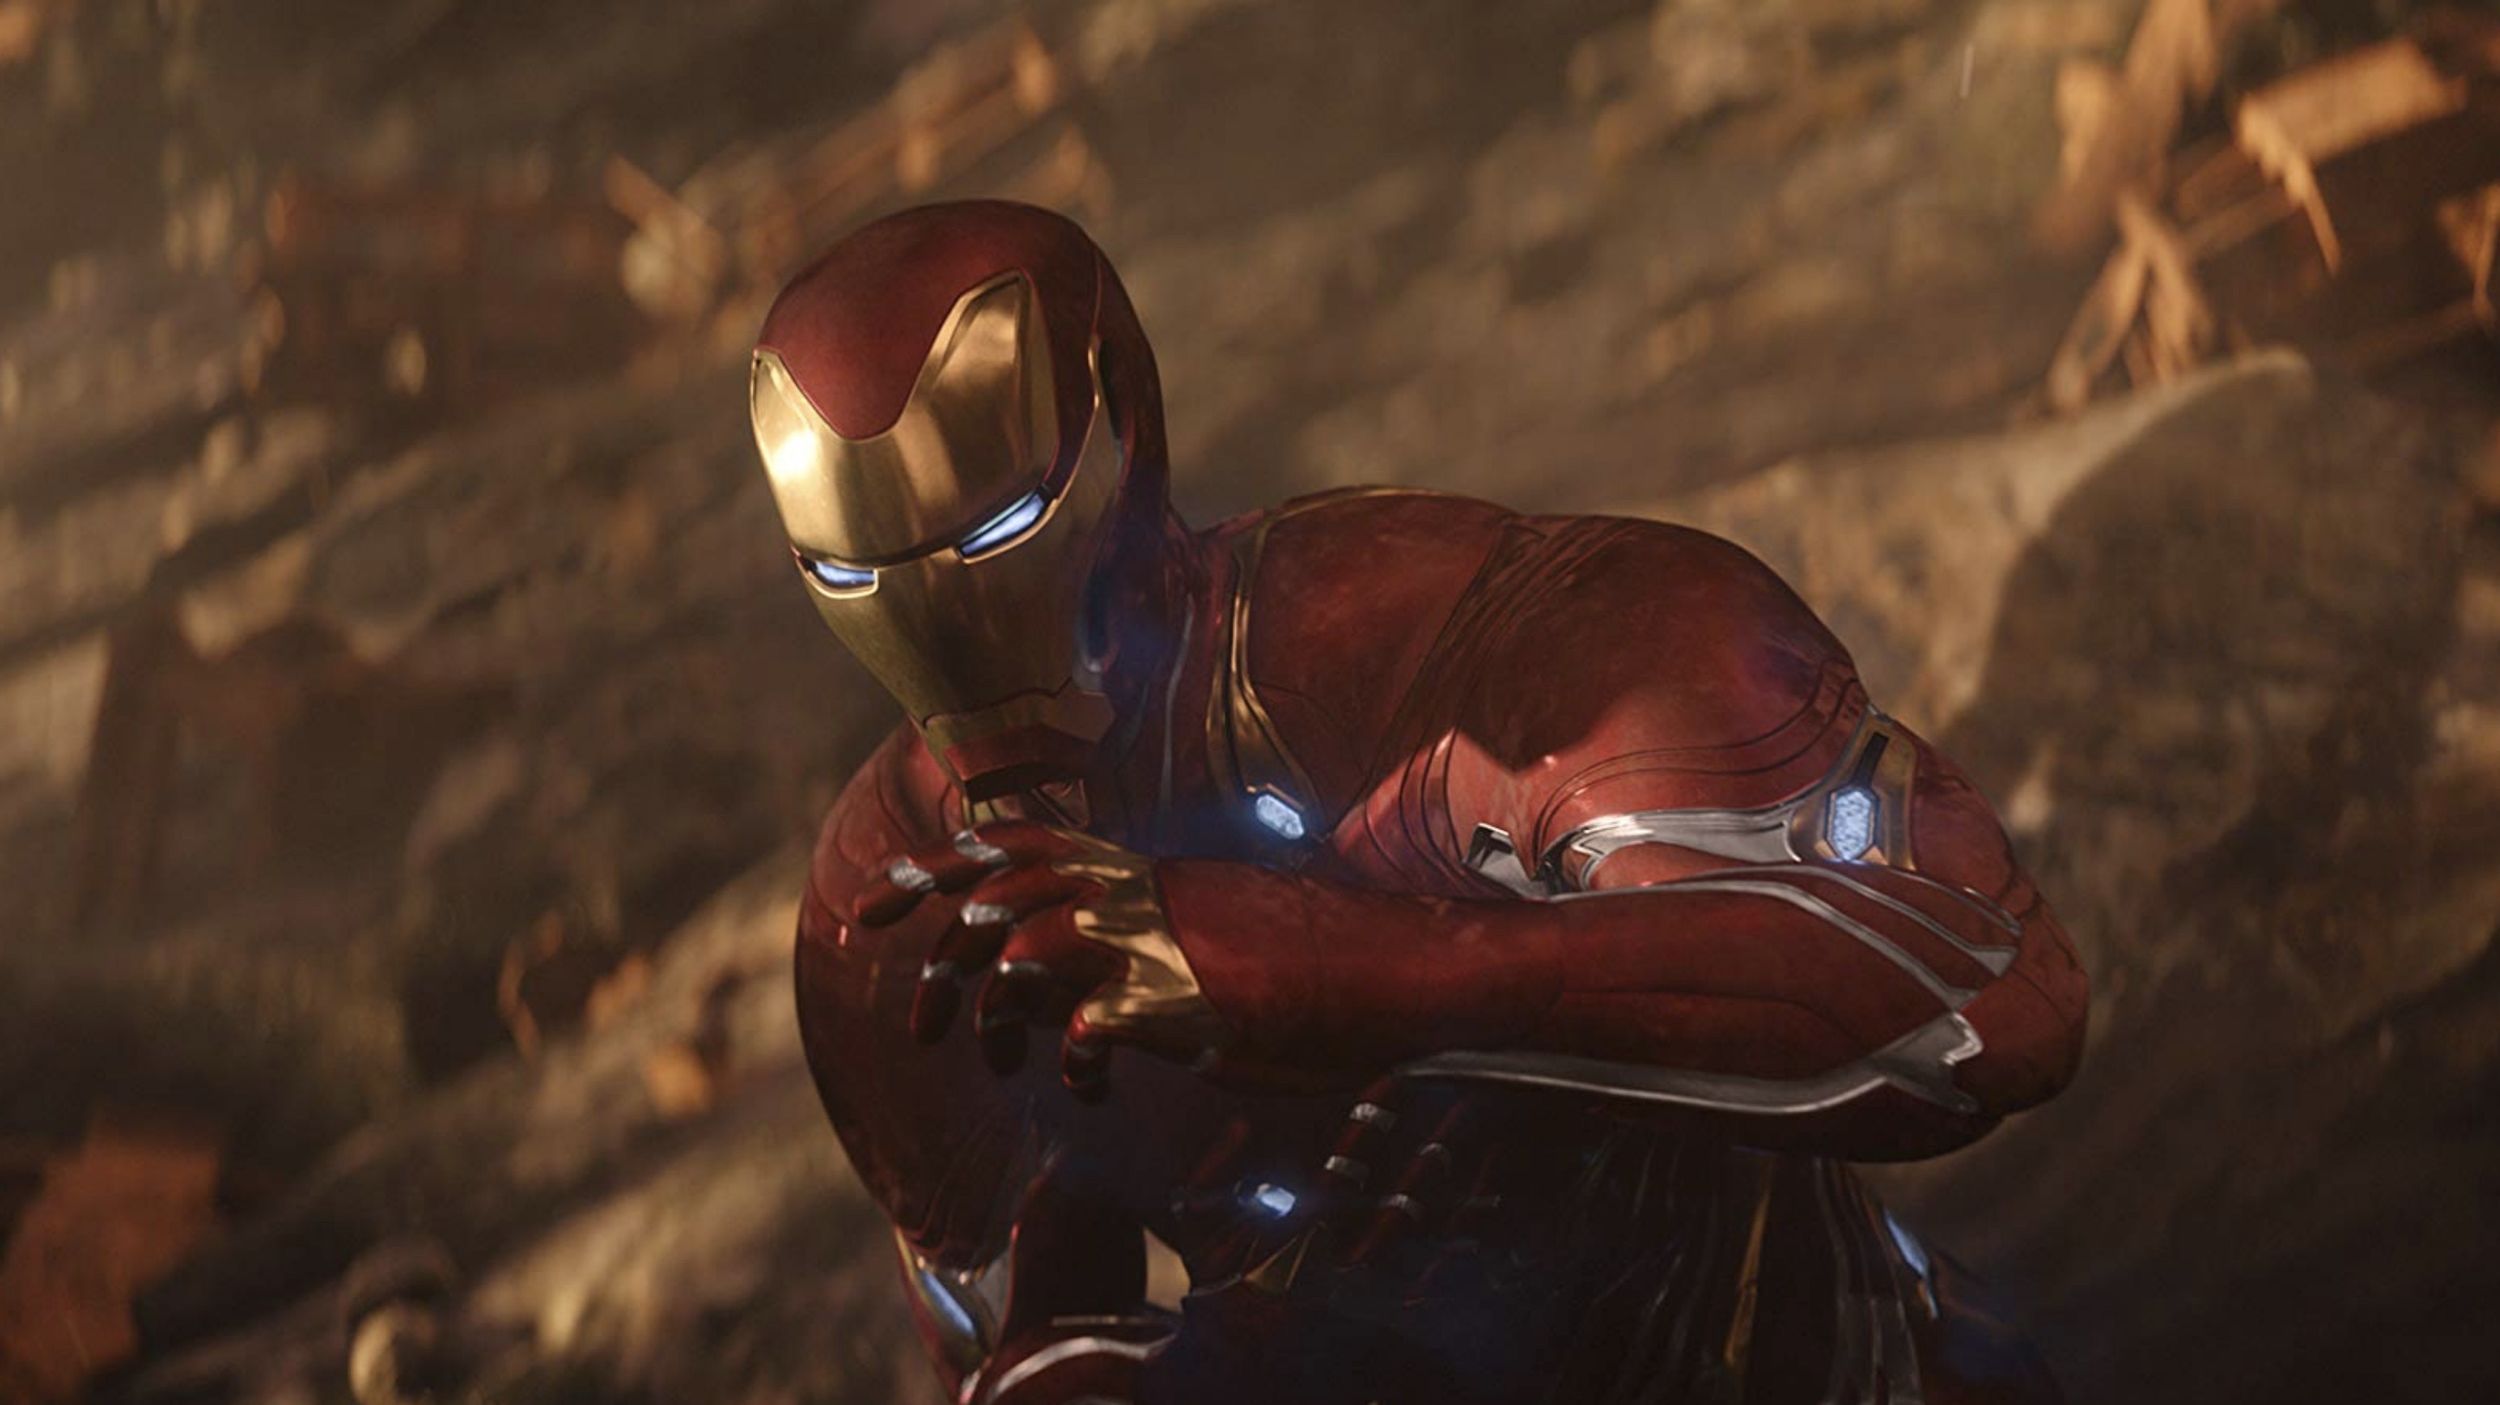 Download Avengers Endgame Tony Stark .cikimm.com